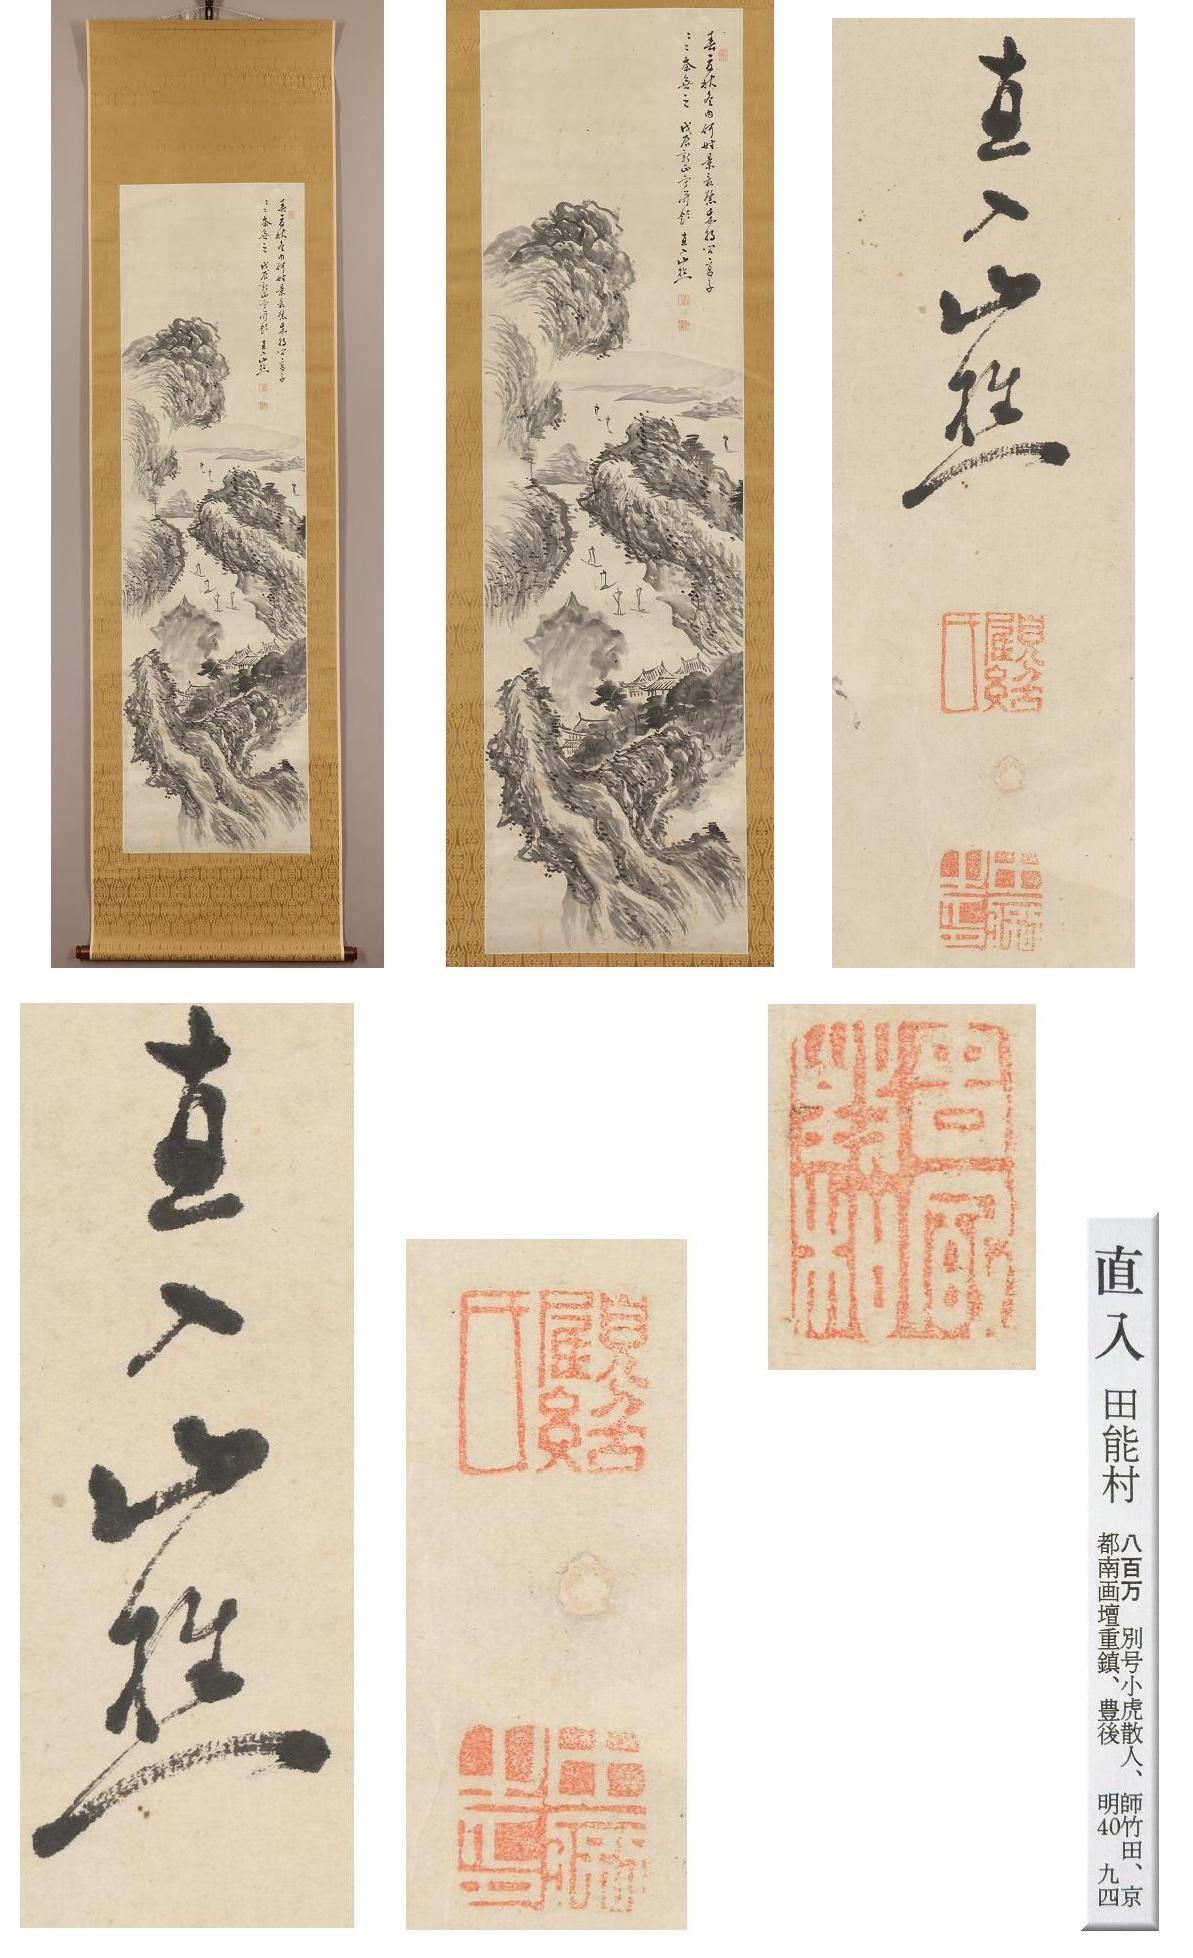 [Authentic work] ◆Tanomura Chokunyu ◆Ink painting landscape ◆Japanese painting ◆Handpainted ◆ Paper ◆ Hanging scroll ◆

Chokunyu Tanomura
1814 (Bunka 11) - 1907 (Meiji 40)
[Art yearbook appraised value 8 million yen]
